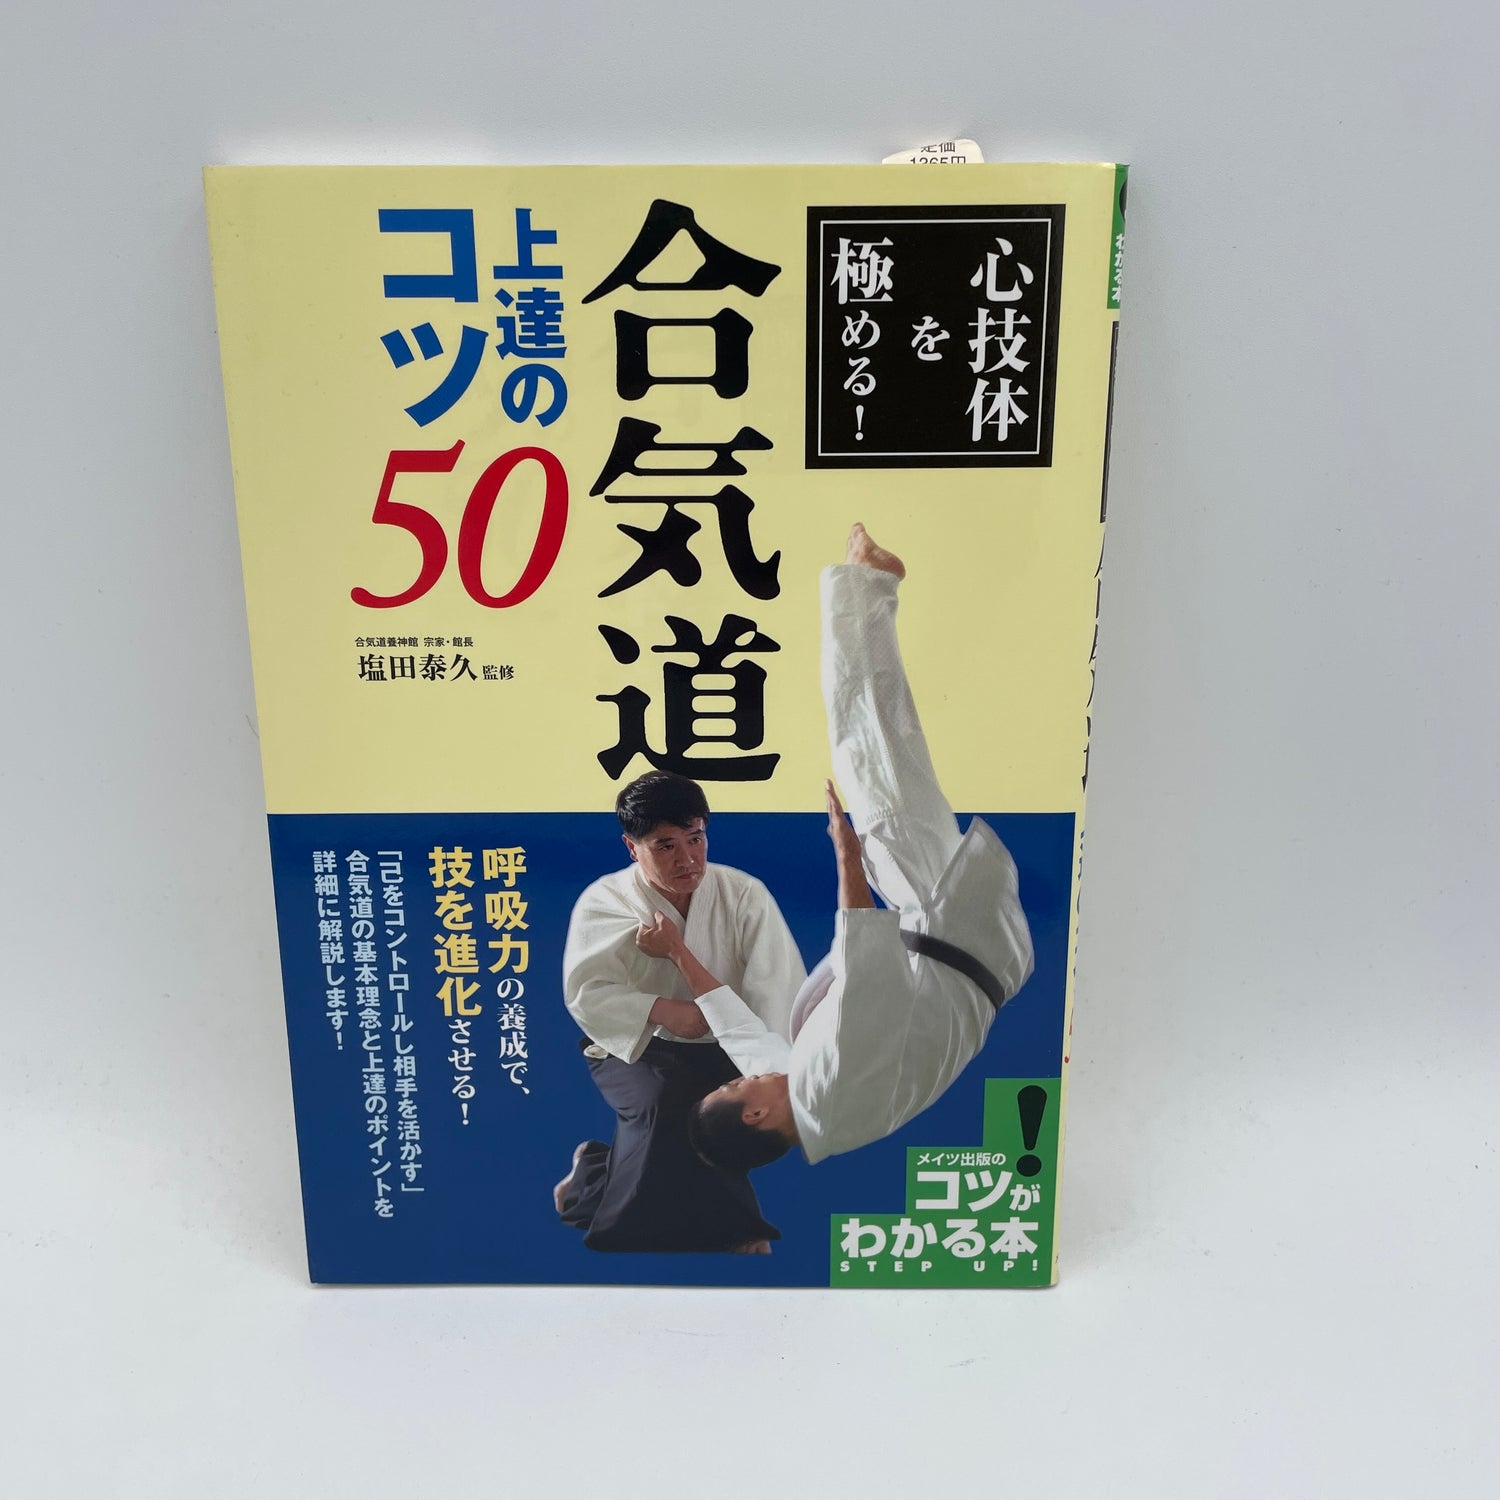 50 consejos para mejorar tu libro de Aikido de Yasuhisa Shioda